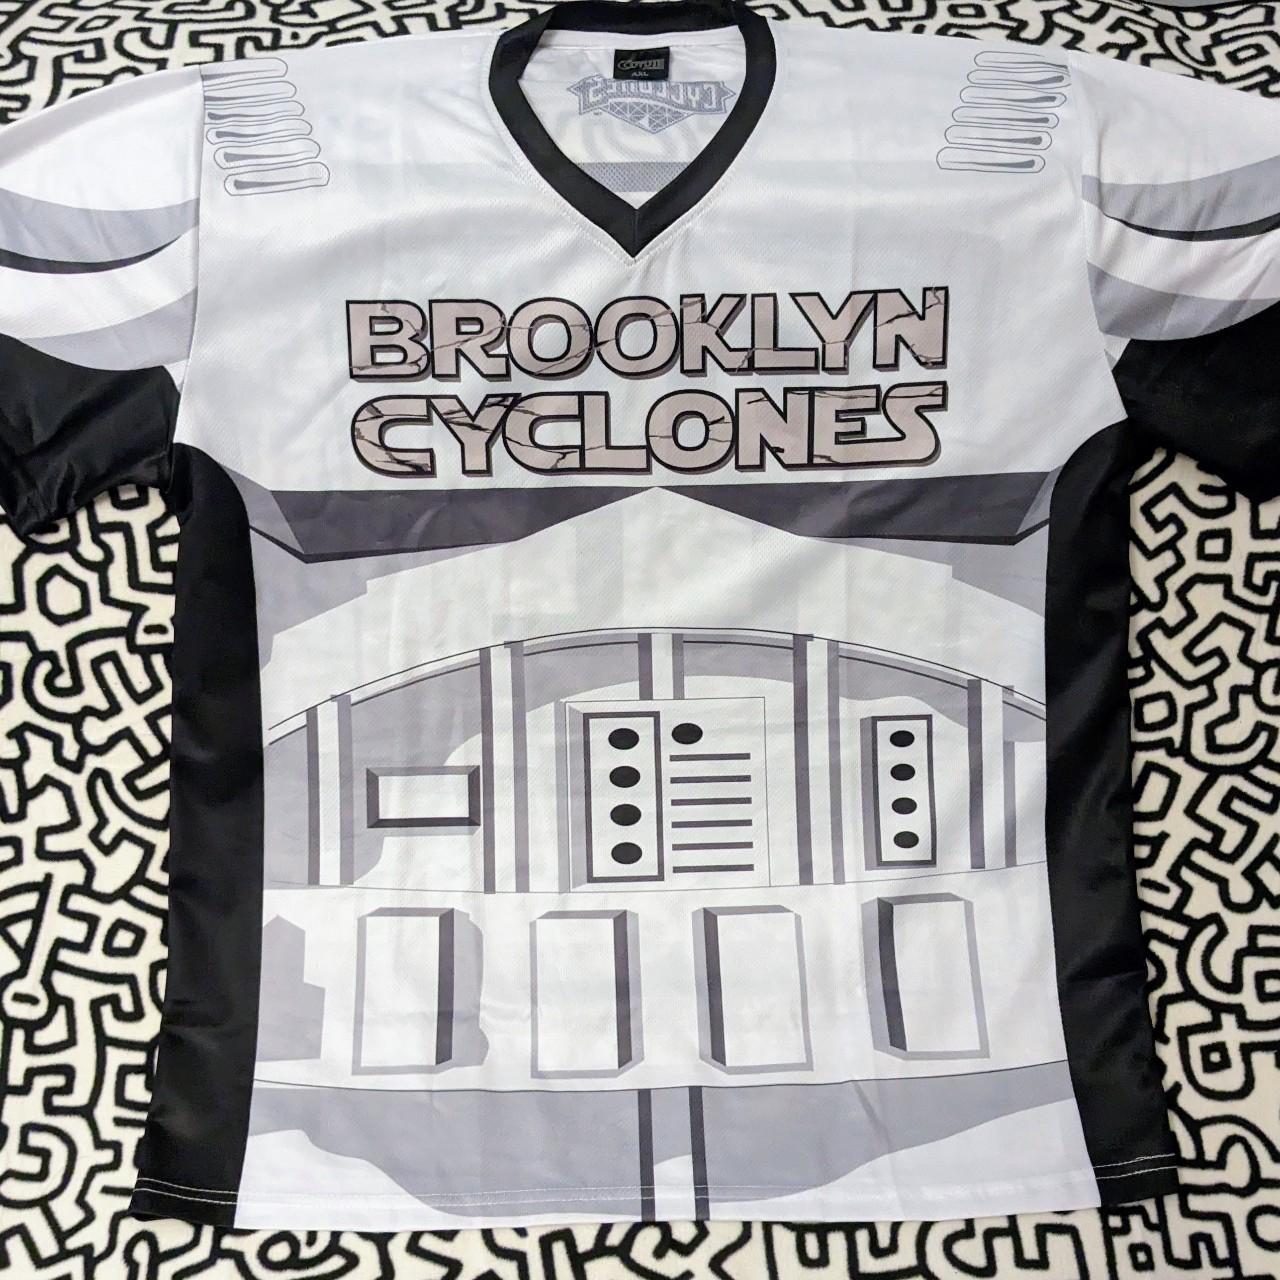 Brooklyn cyclones game jersey size medium